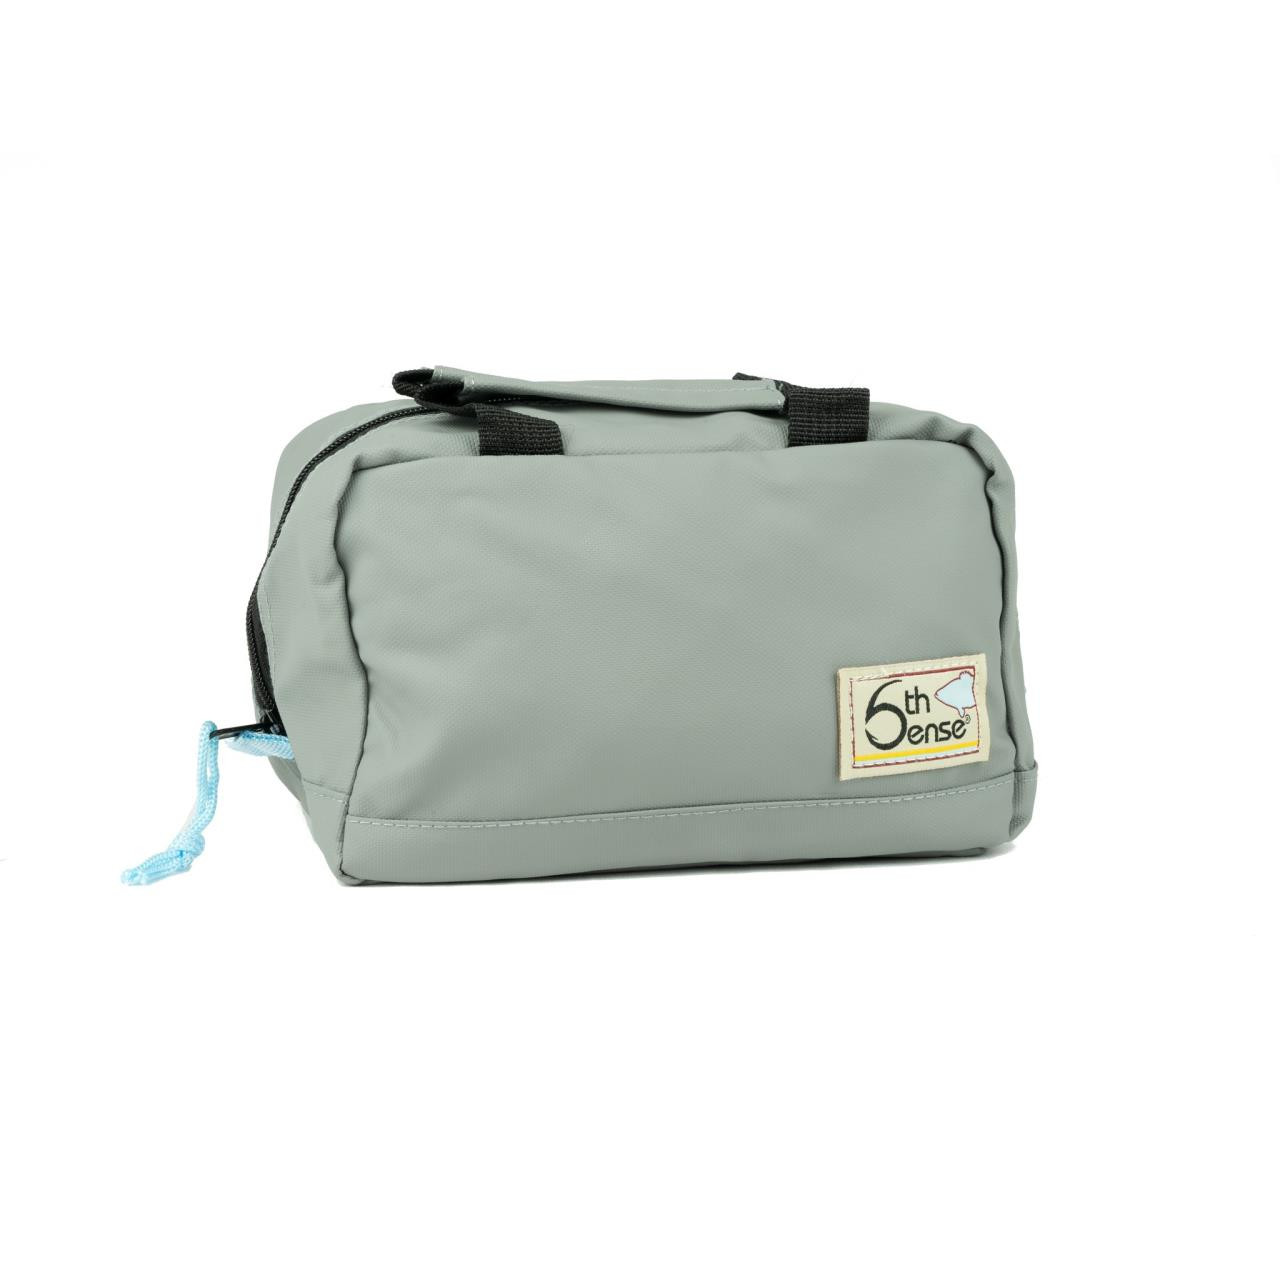 6th Sense Bait Bag - Large - Gray